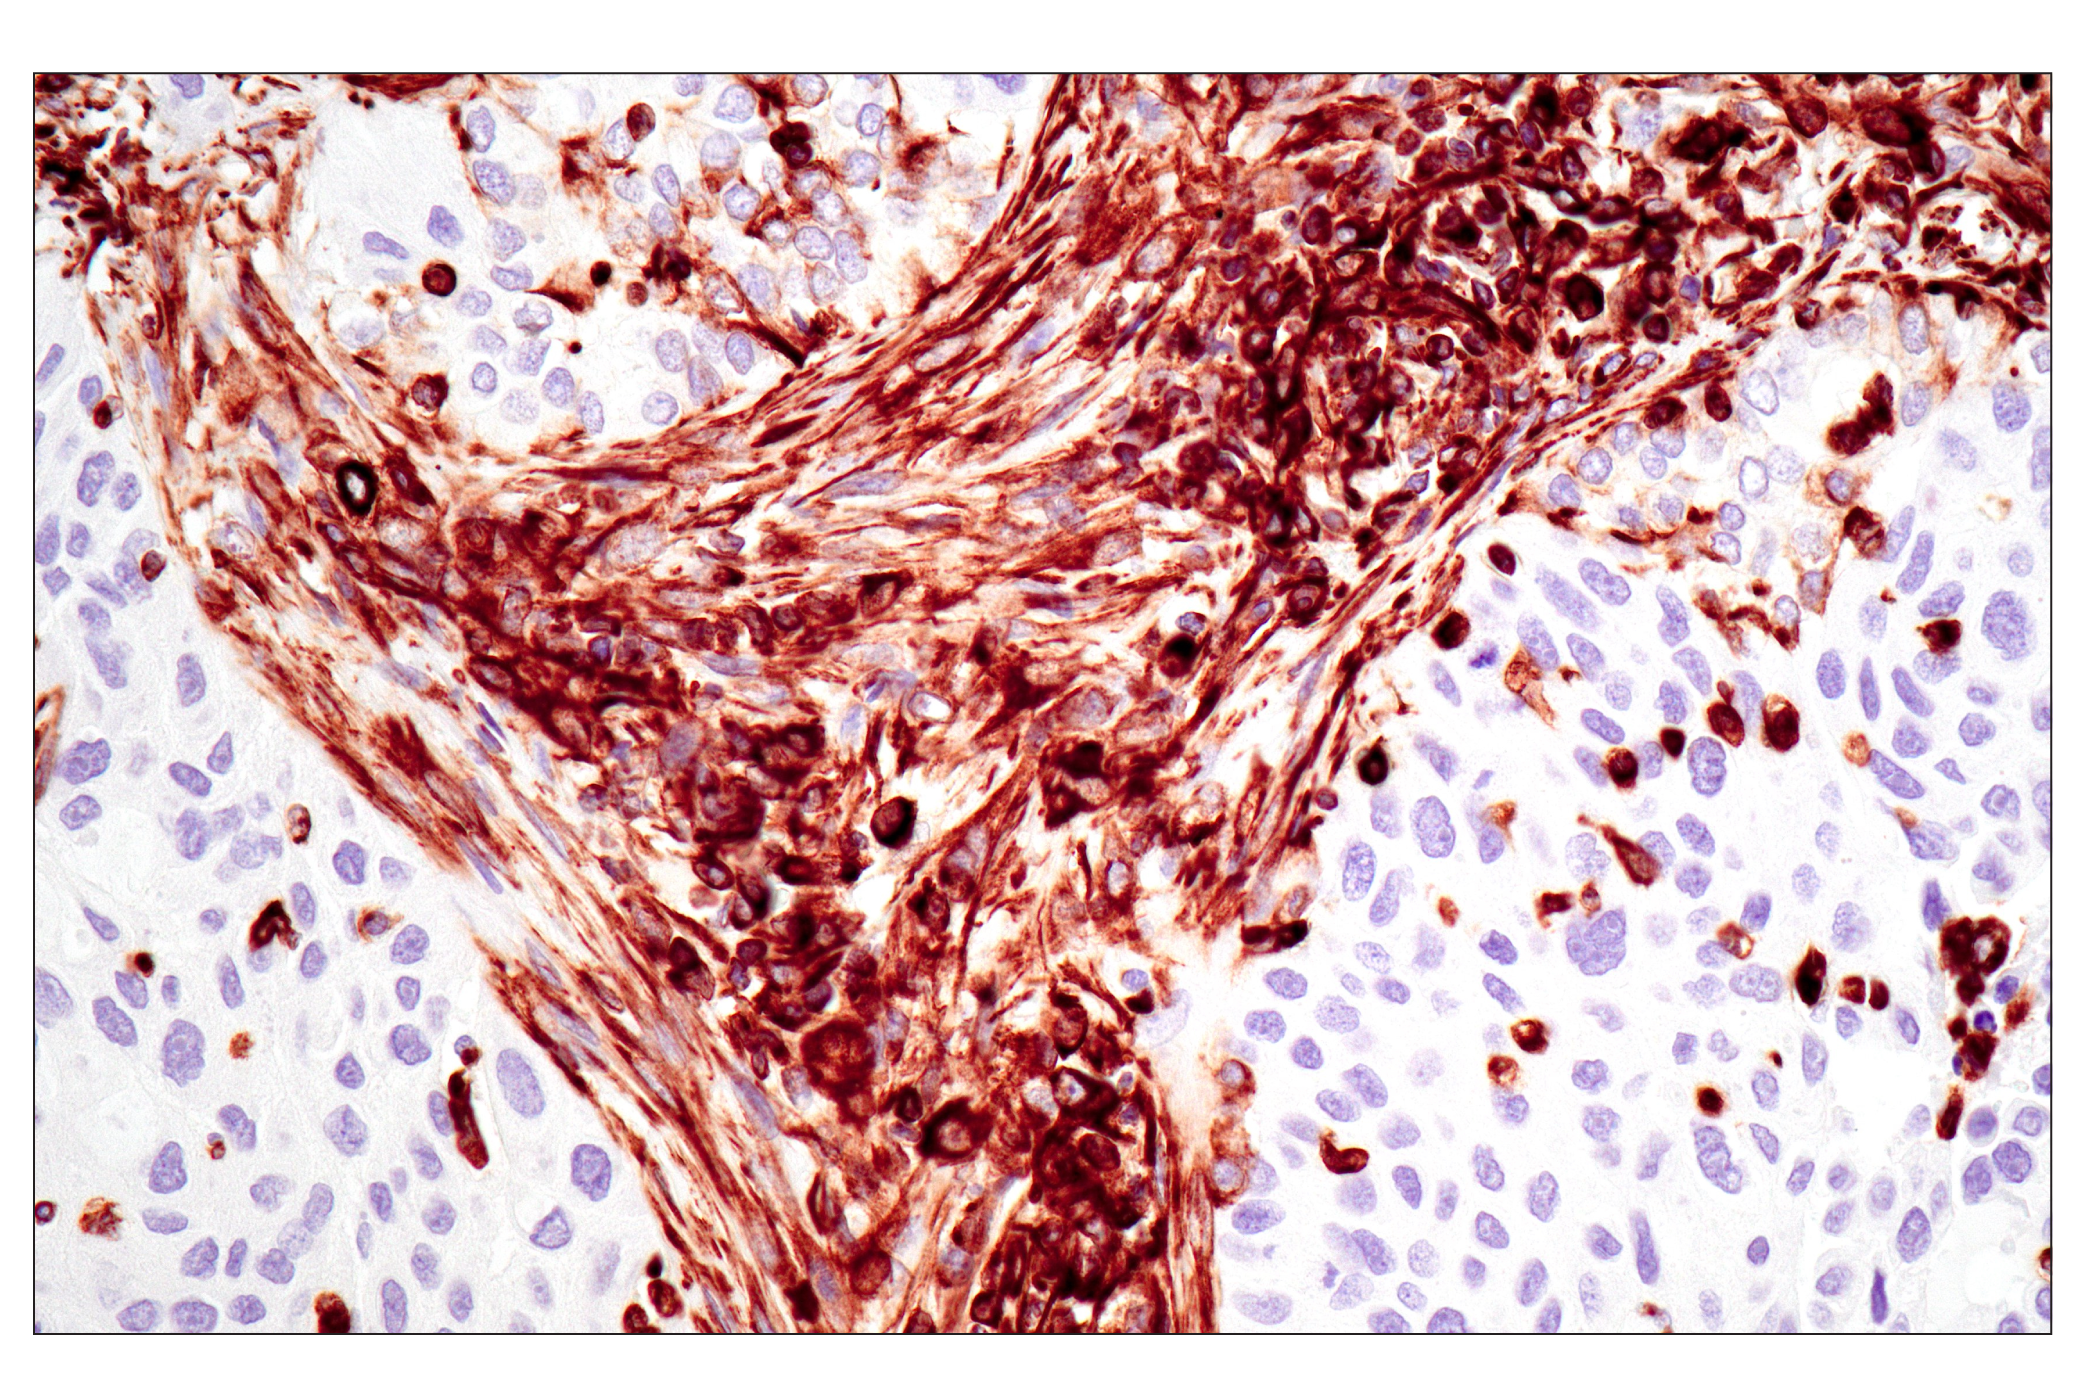  Image 34: Epithelial-Mesenchymal Transition (EMT) Antibody Sampler Kit